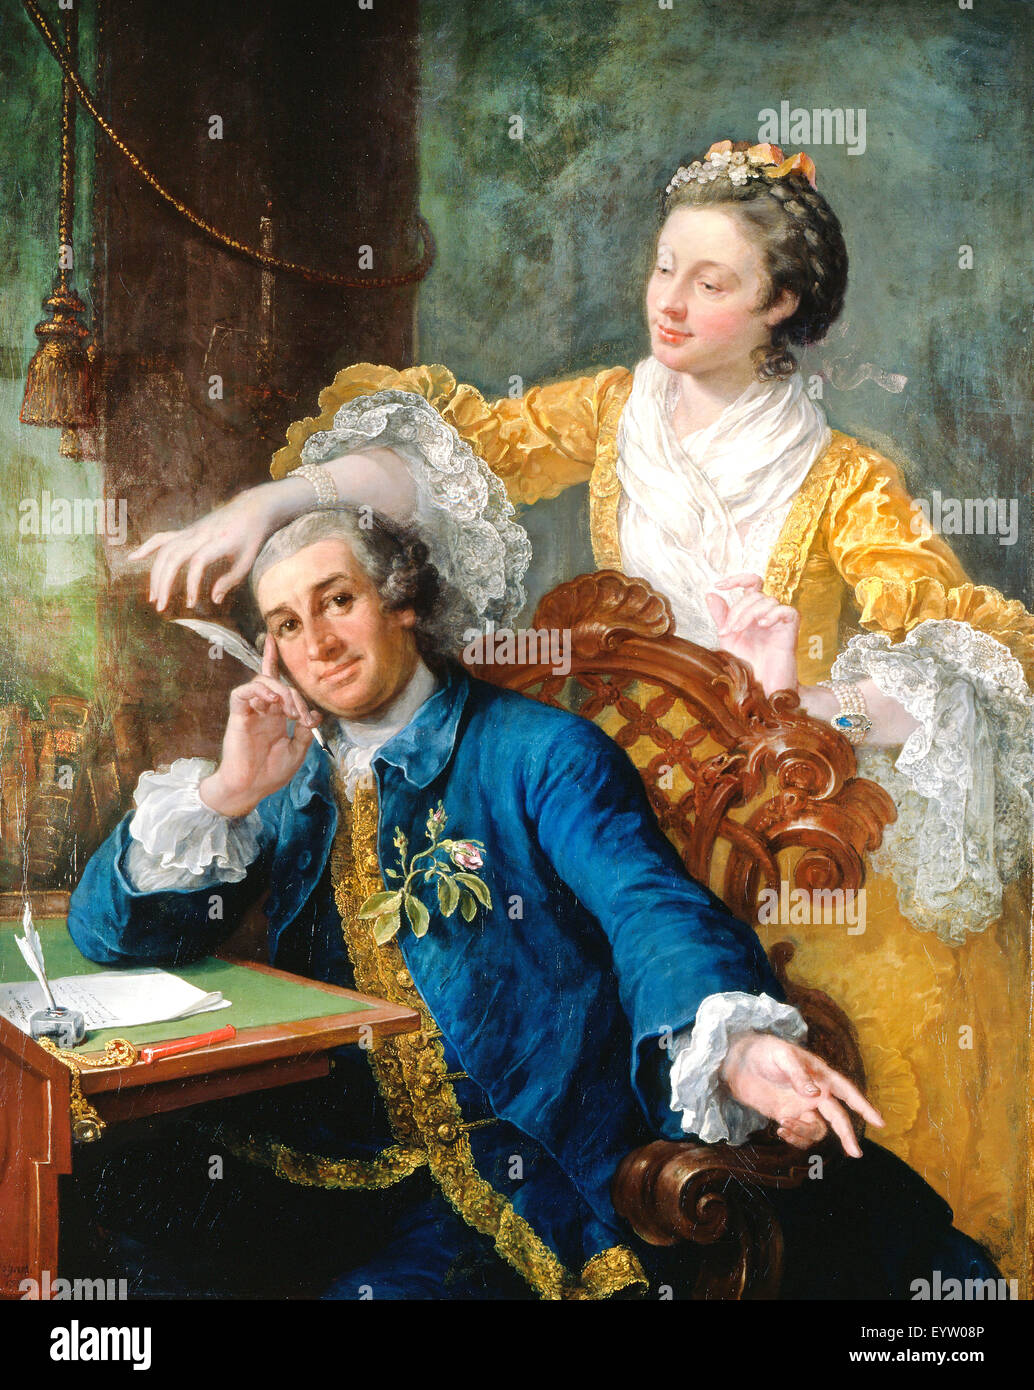 William Hogarth, David Garrick with His Wife Eva-Maria Veigel, 'La Violette' or 'Violetti'. 1757-1764 Oil on canvas. Royal Colle Stock Photo